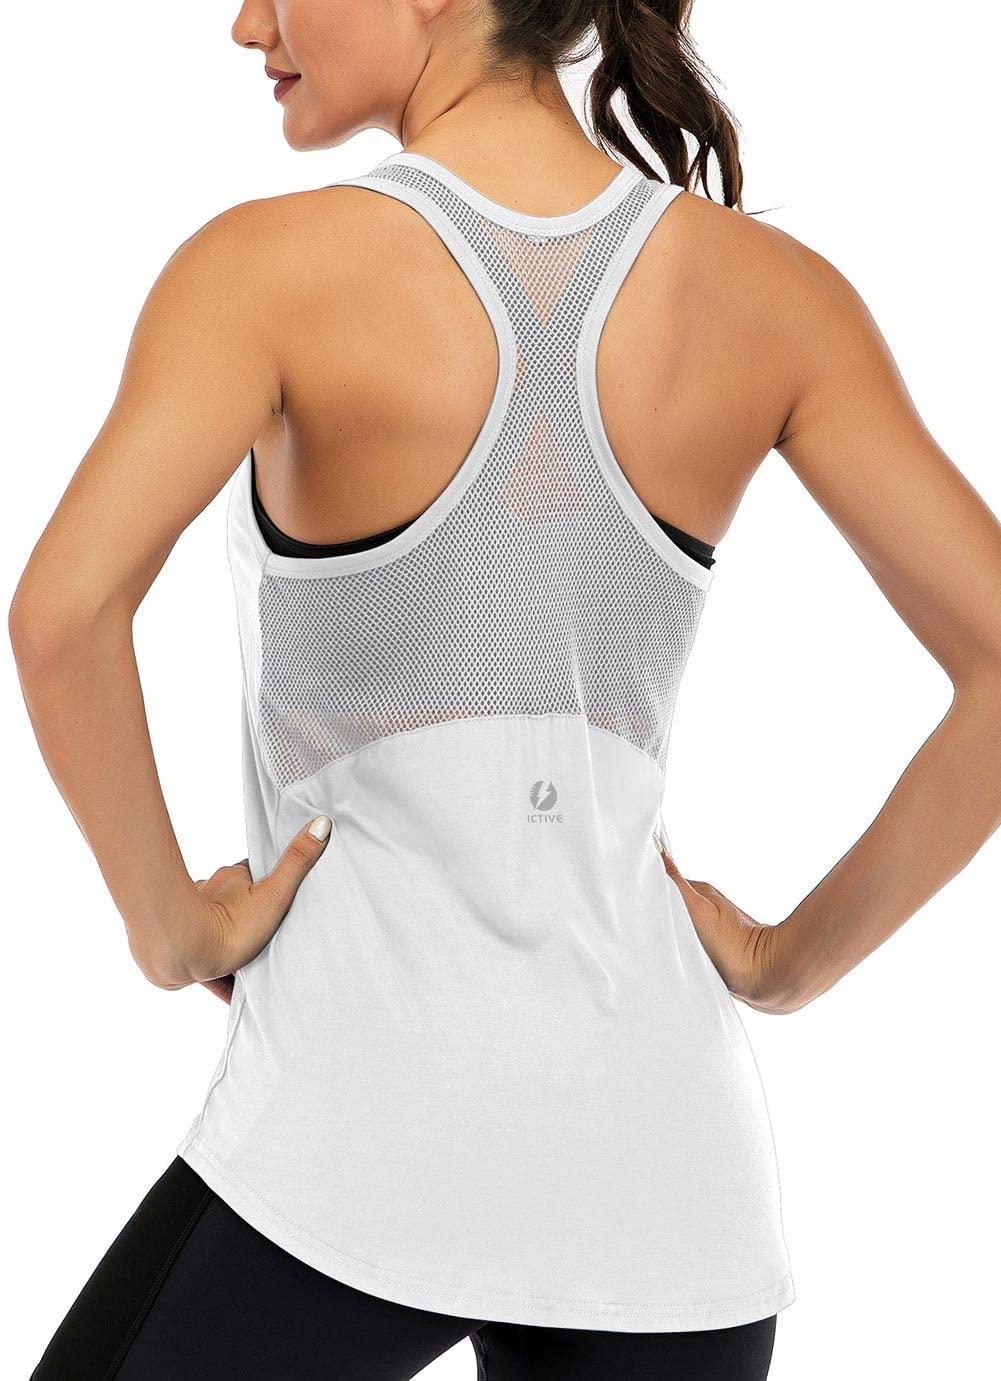 Buy Fihapyli Long Sleeve Workout Shirts for Women Yoga Tops for